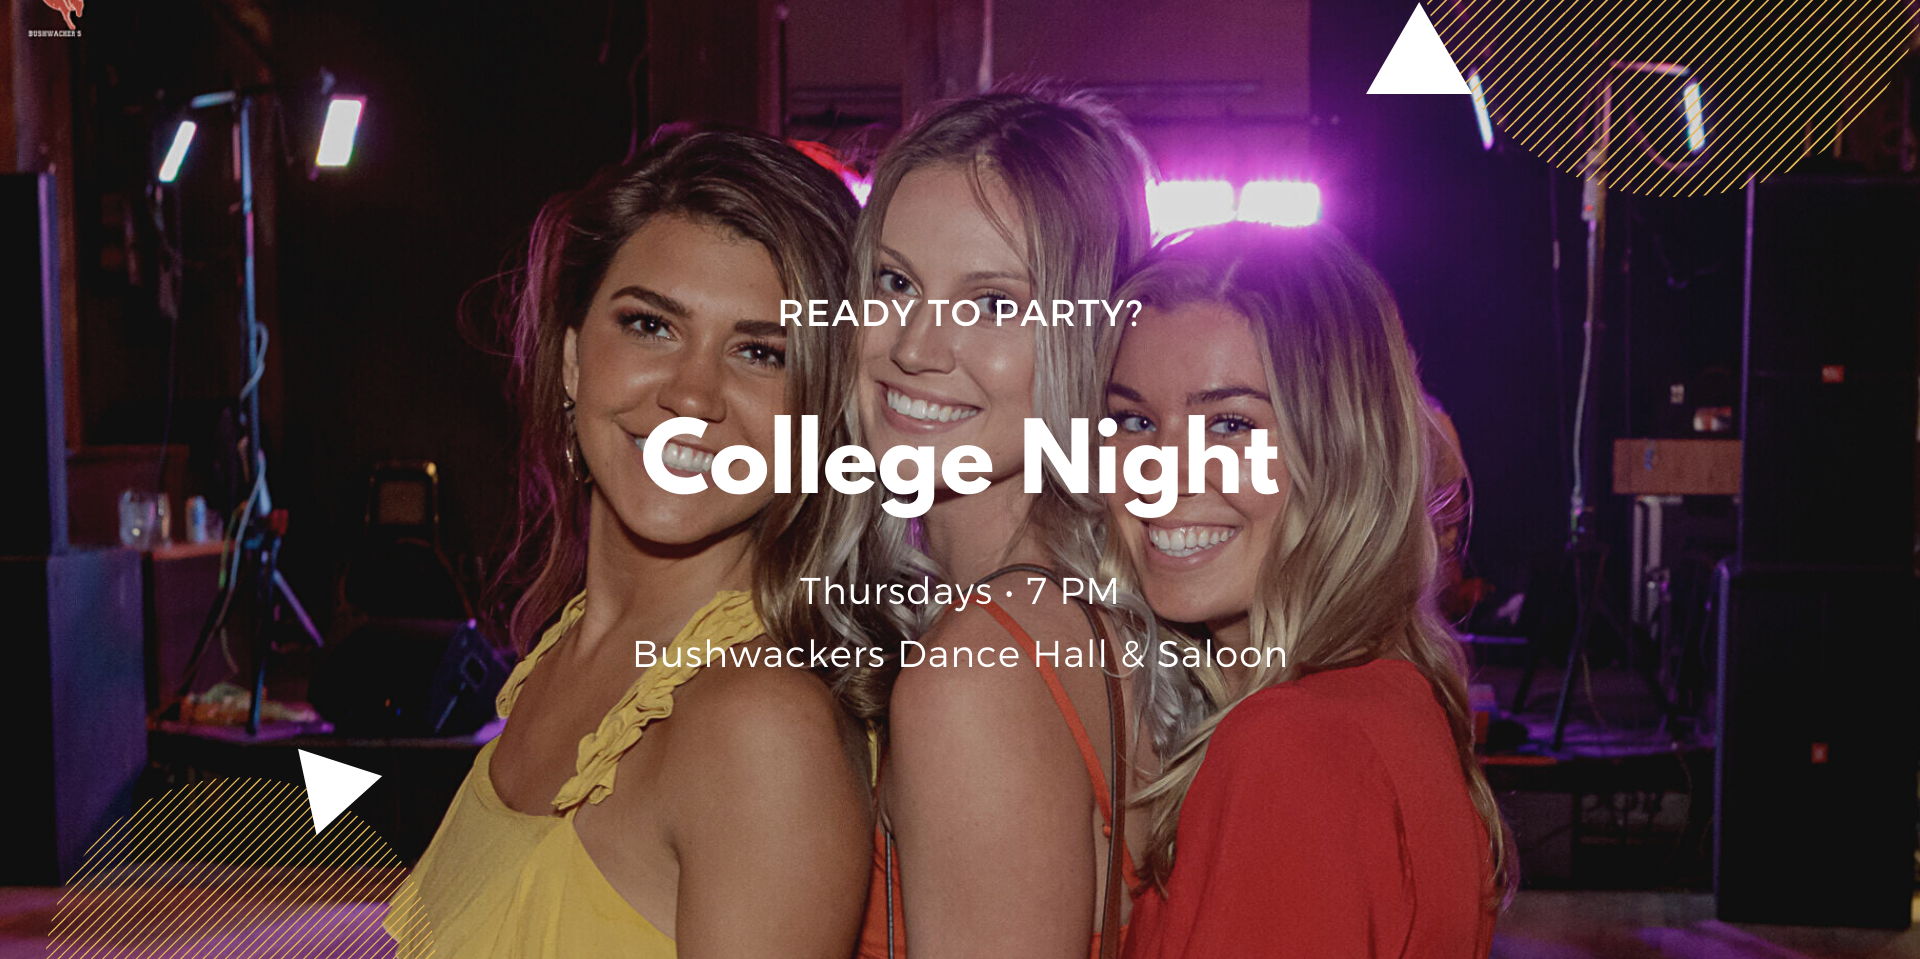 College Night at Bushwackers promotional image